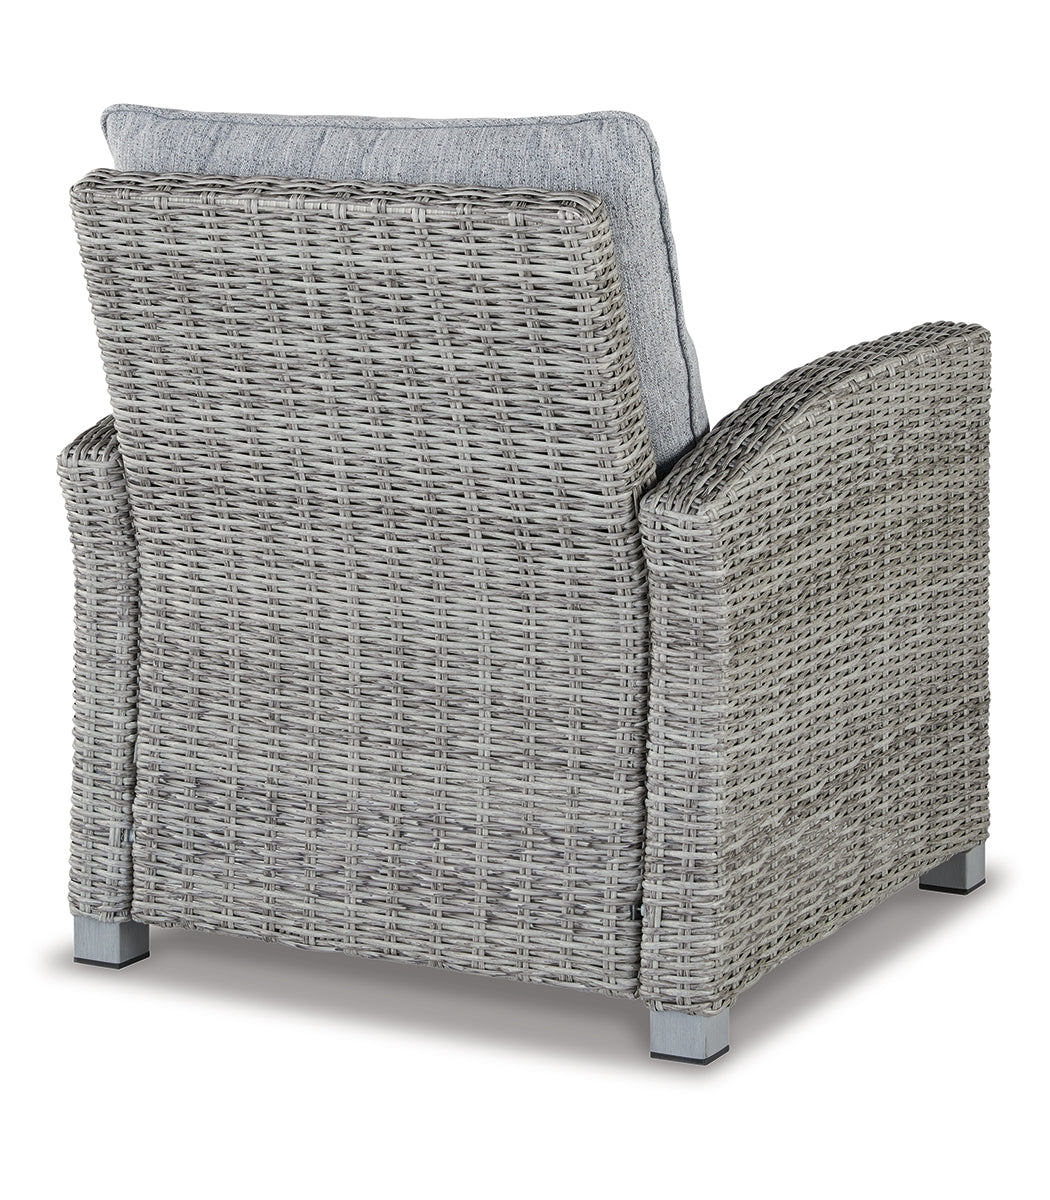 NAPLES BEACH Lounge Chair with Cushion